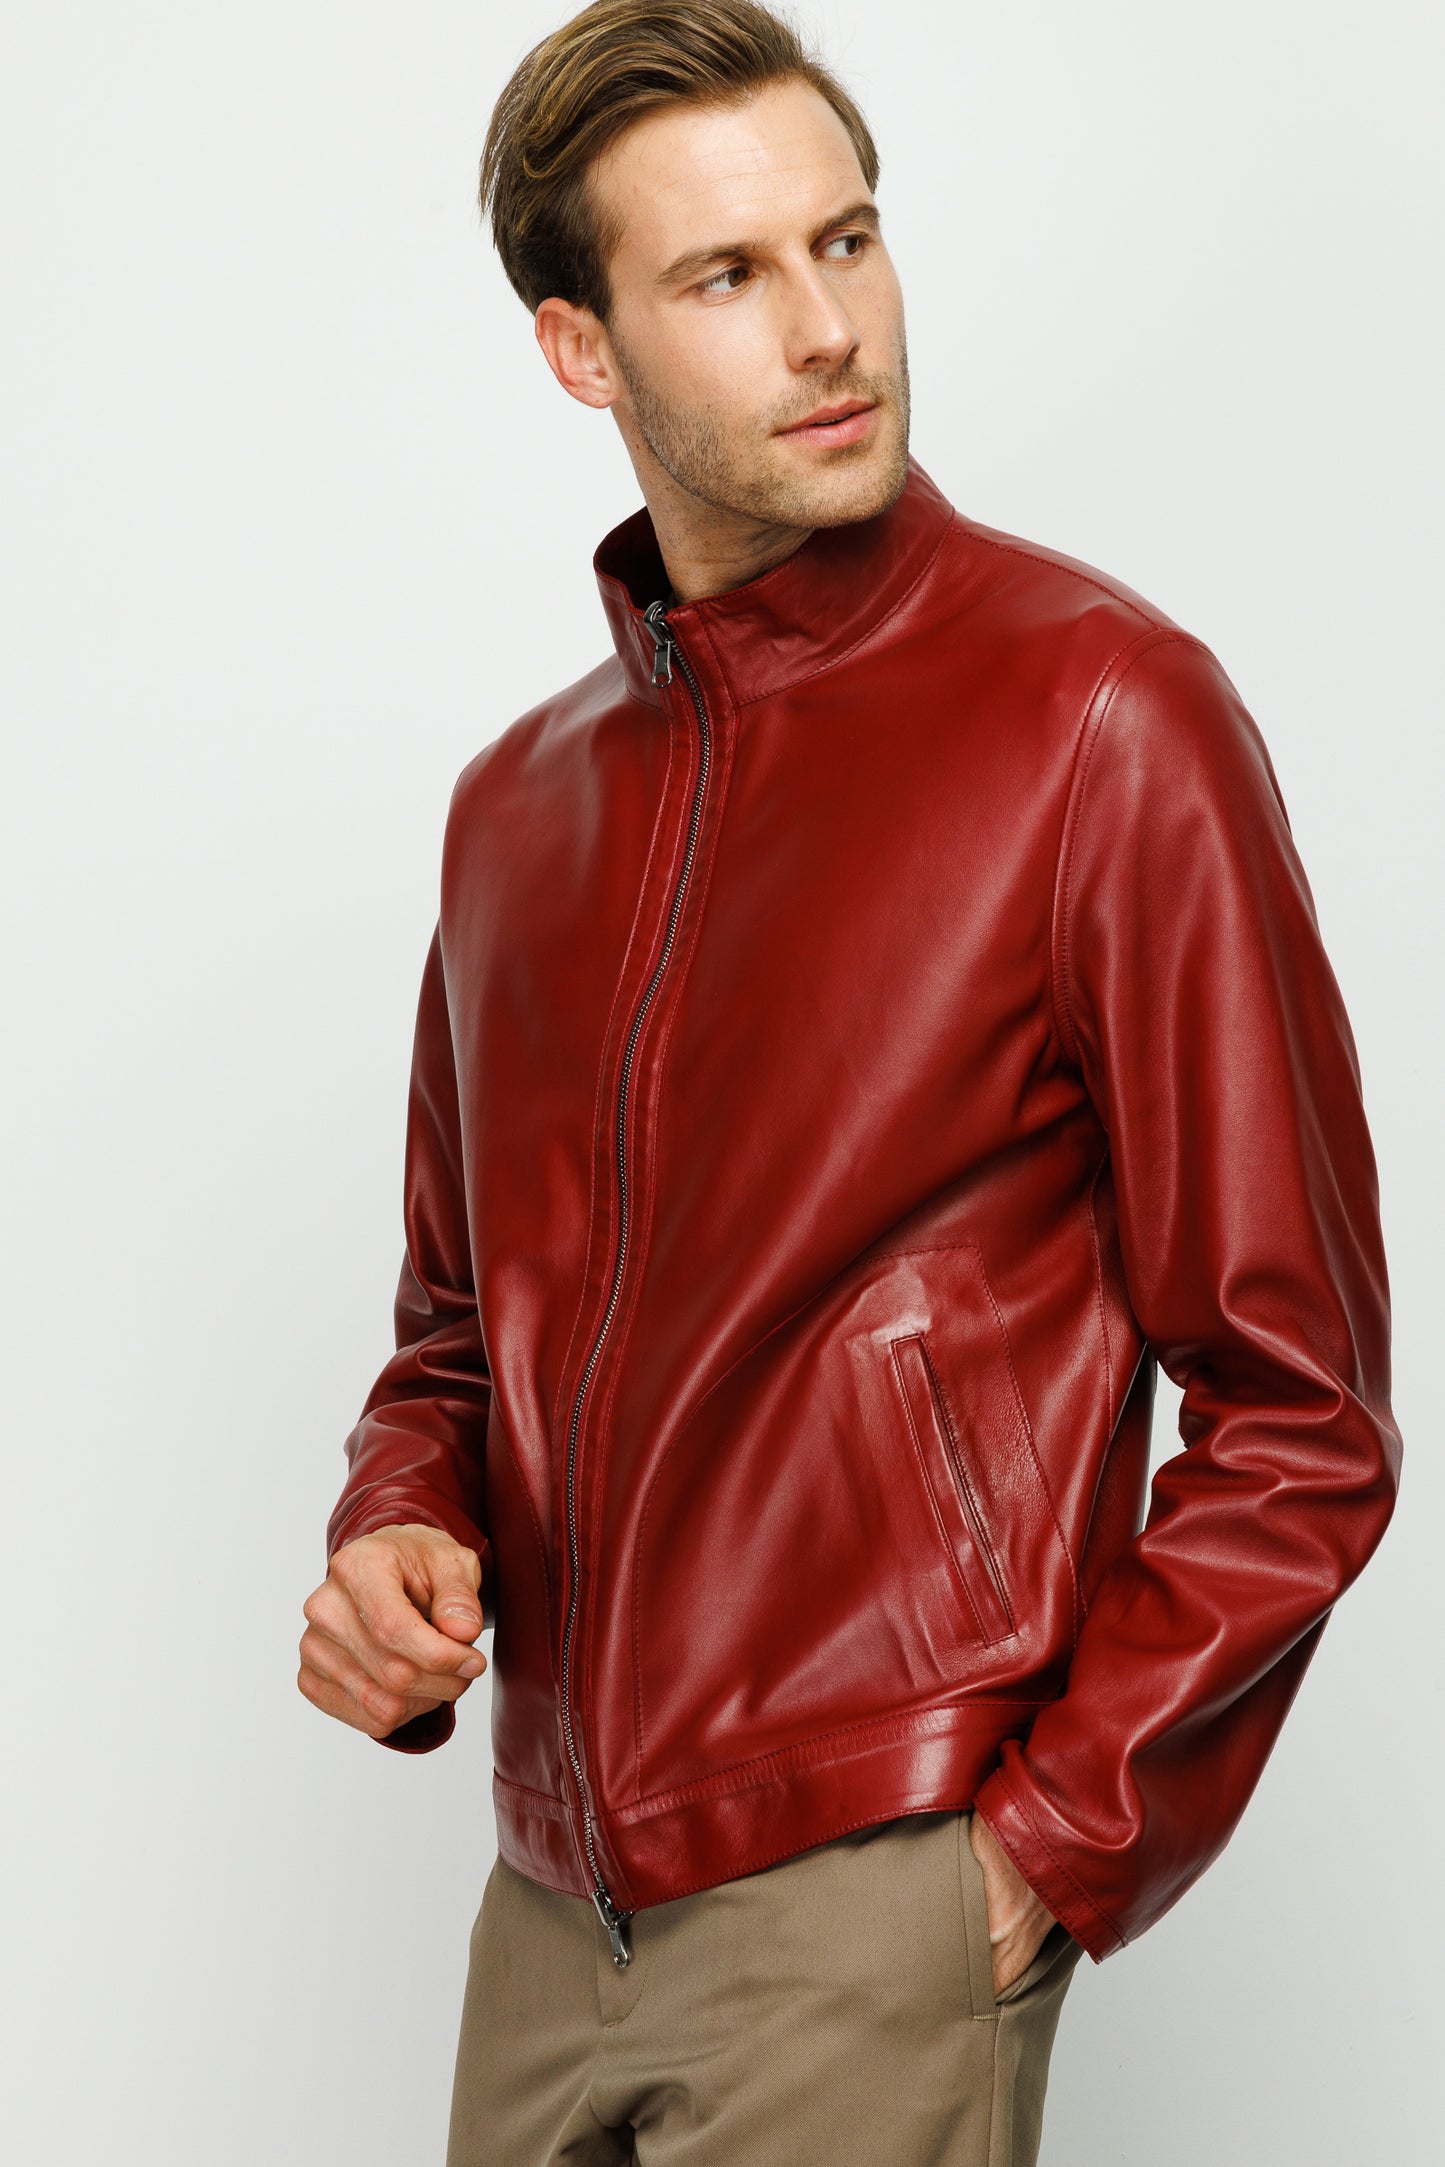 The Del Rio Burgundy Leather Men Jacket